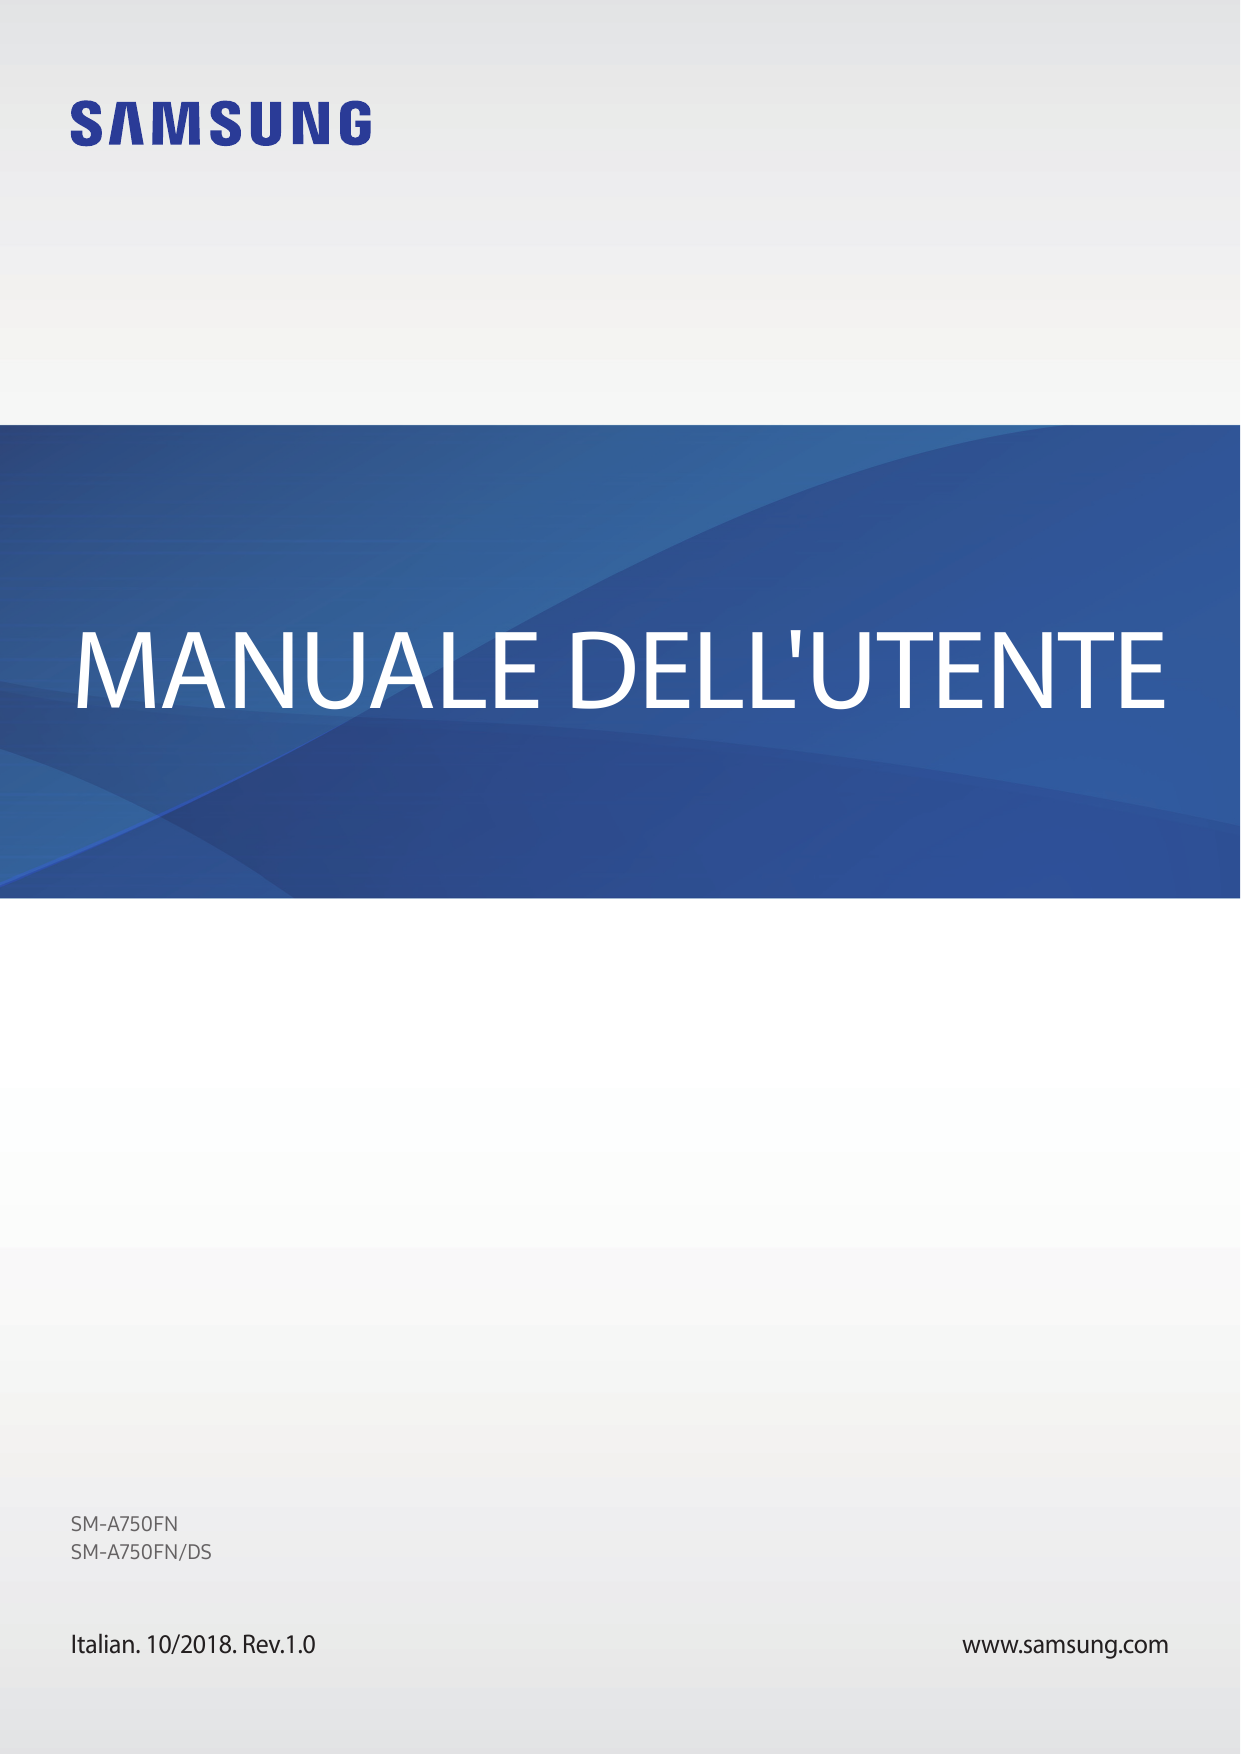 MANUALE DELL'UTENTESM-A750FNSM-A750FN/DSItalian. 10/2018. Rev.1.0www.samsung.com